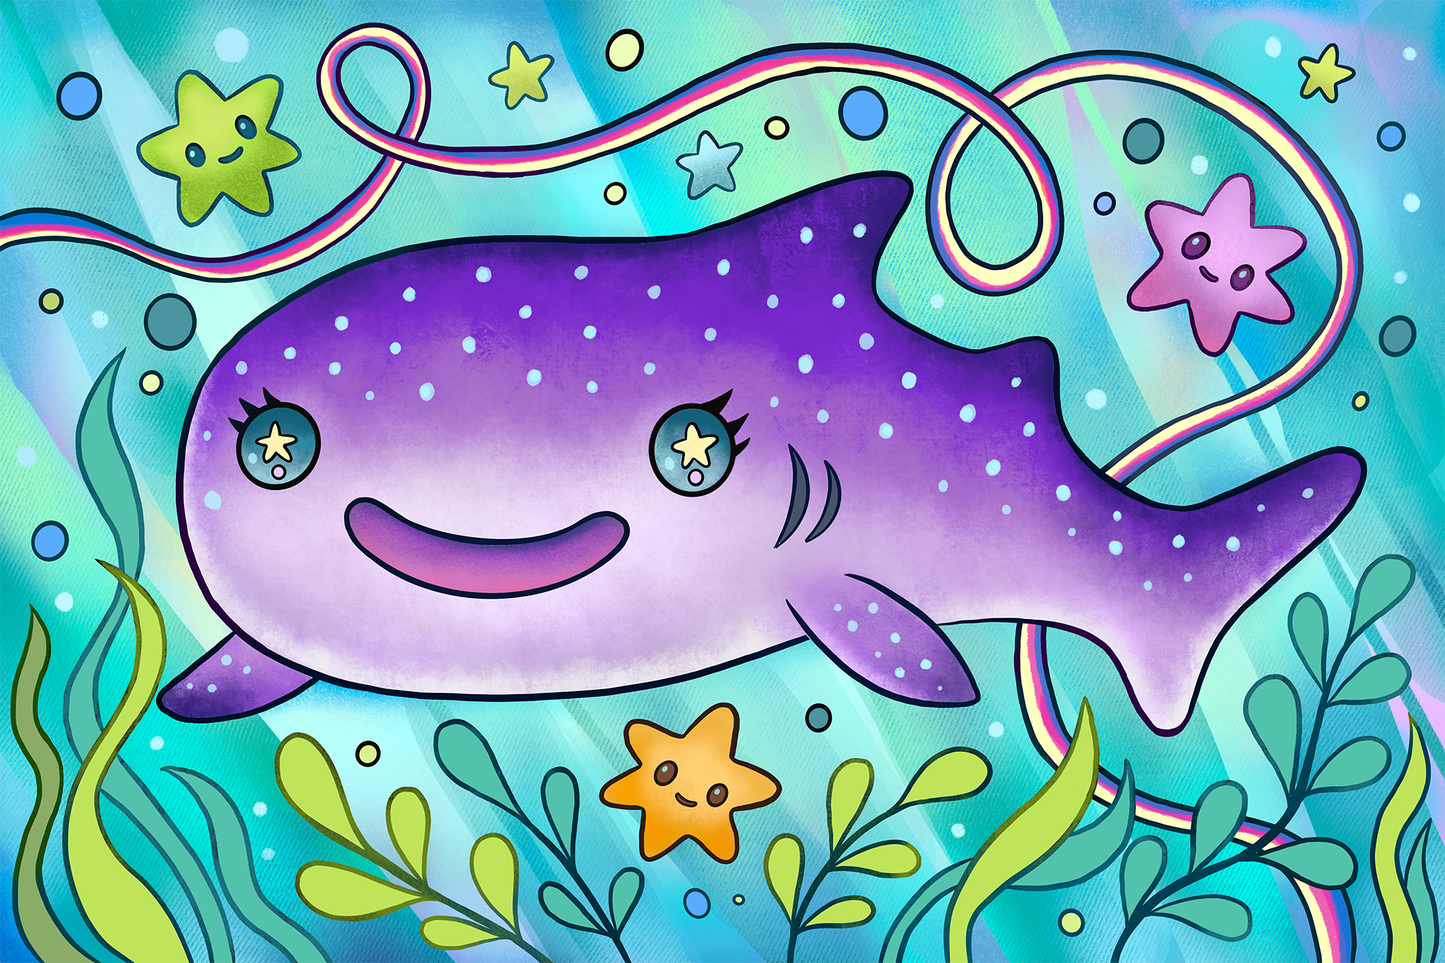 Whale Shark Art Print